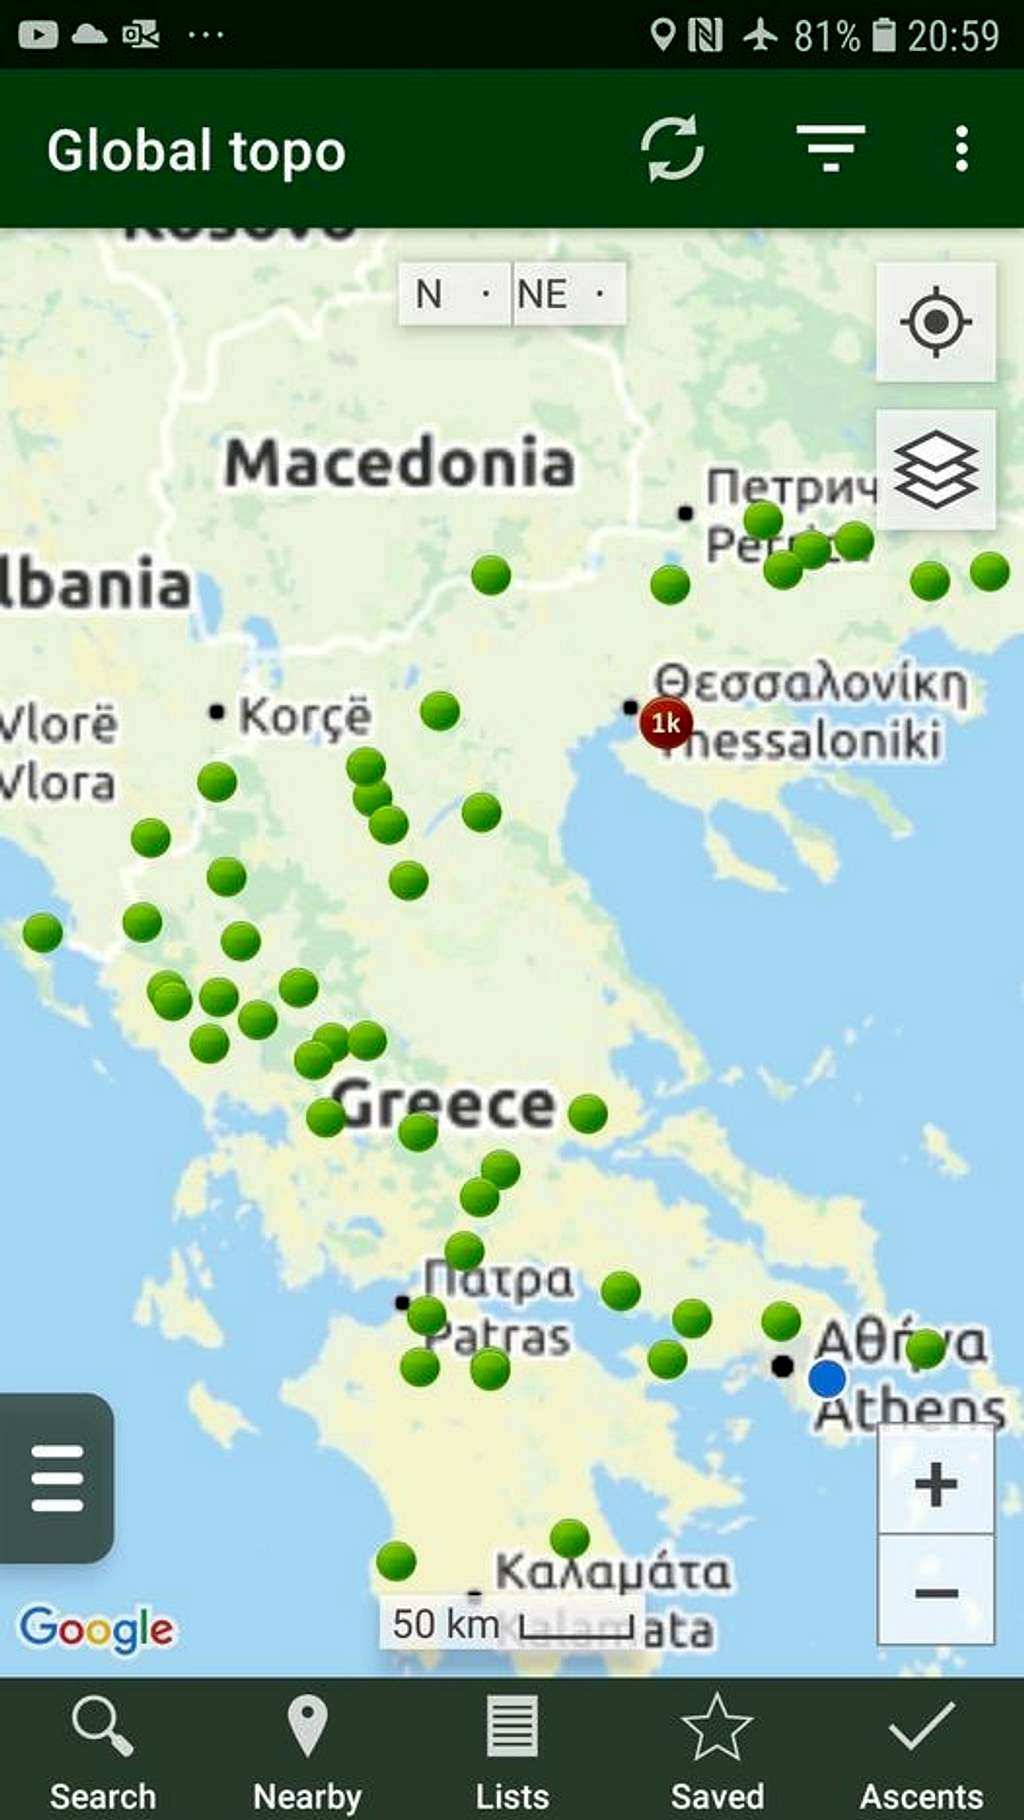 Greece Autumn 2020 ascents